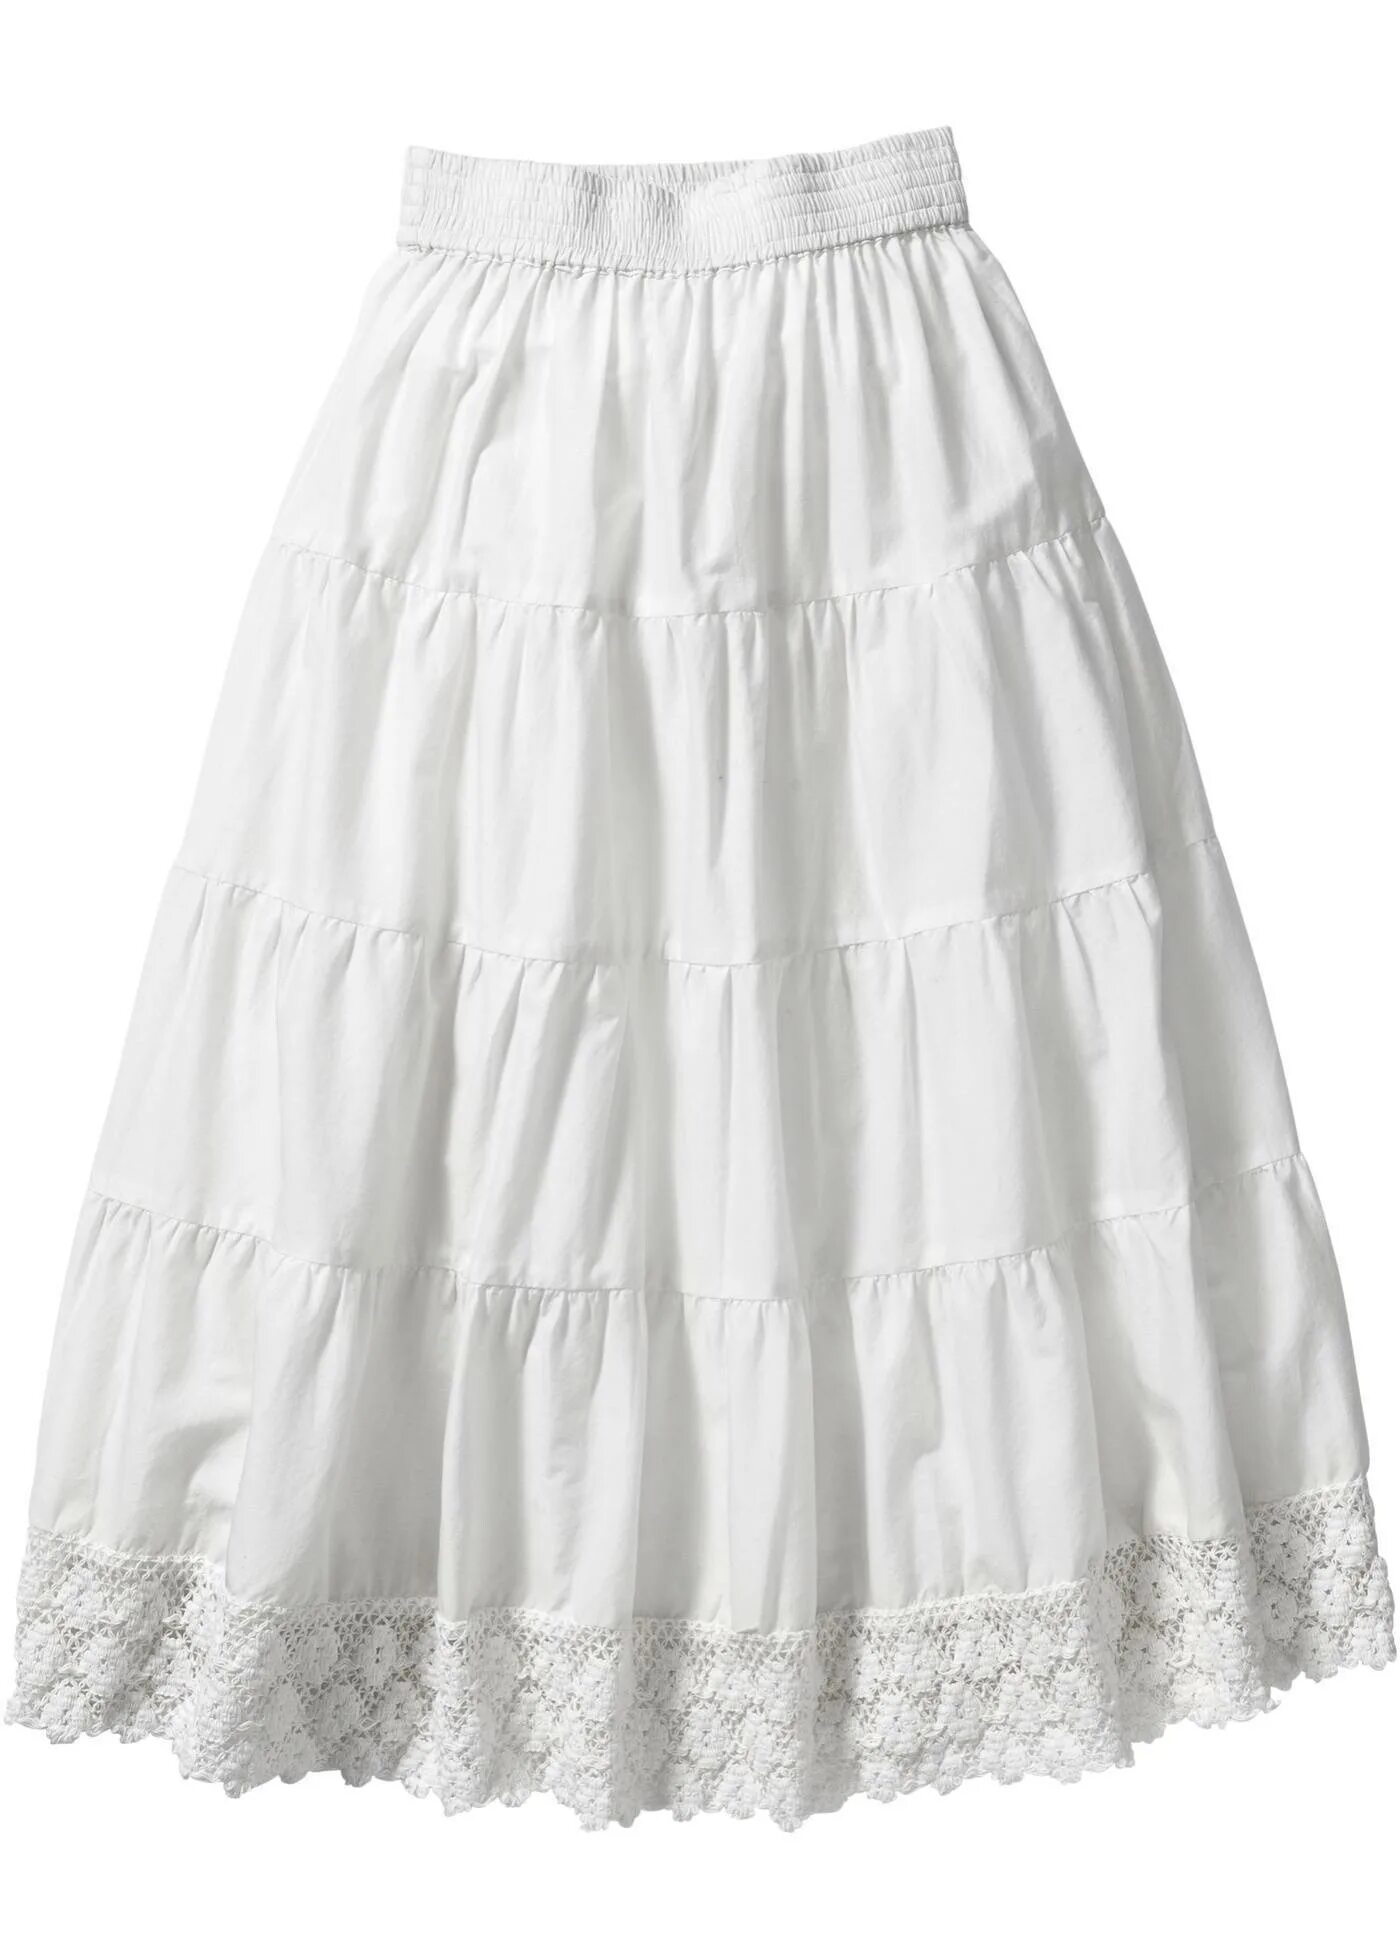 Белая юбка. Хлопчатобумажная юбка. Белая юбка для девочки. Белая летняя юбка. Юбка из муслина